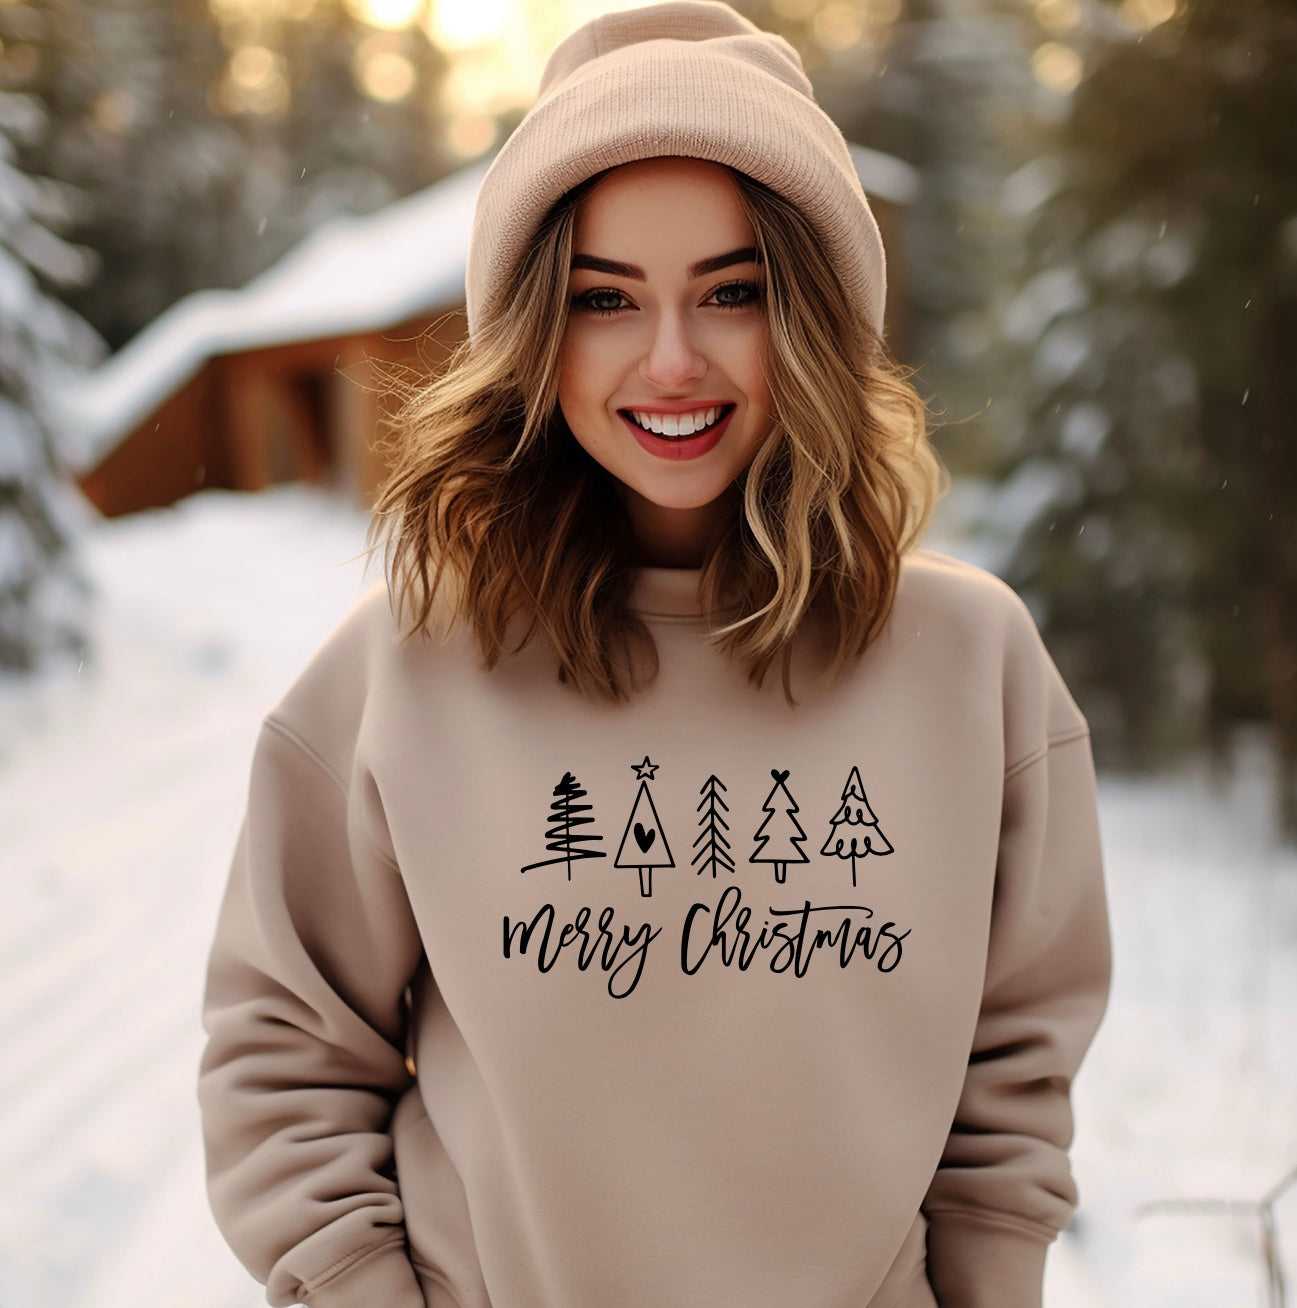 Merry Christmas crewneck sweatshirt with Christmas tree design for women in sand